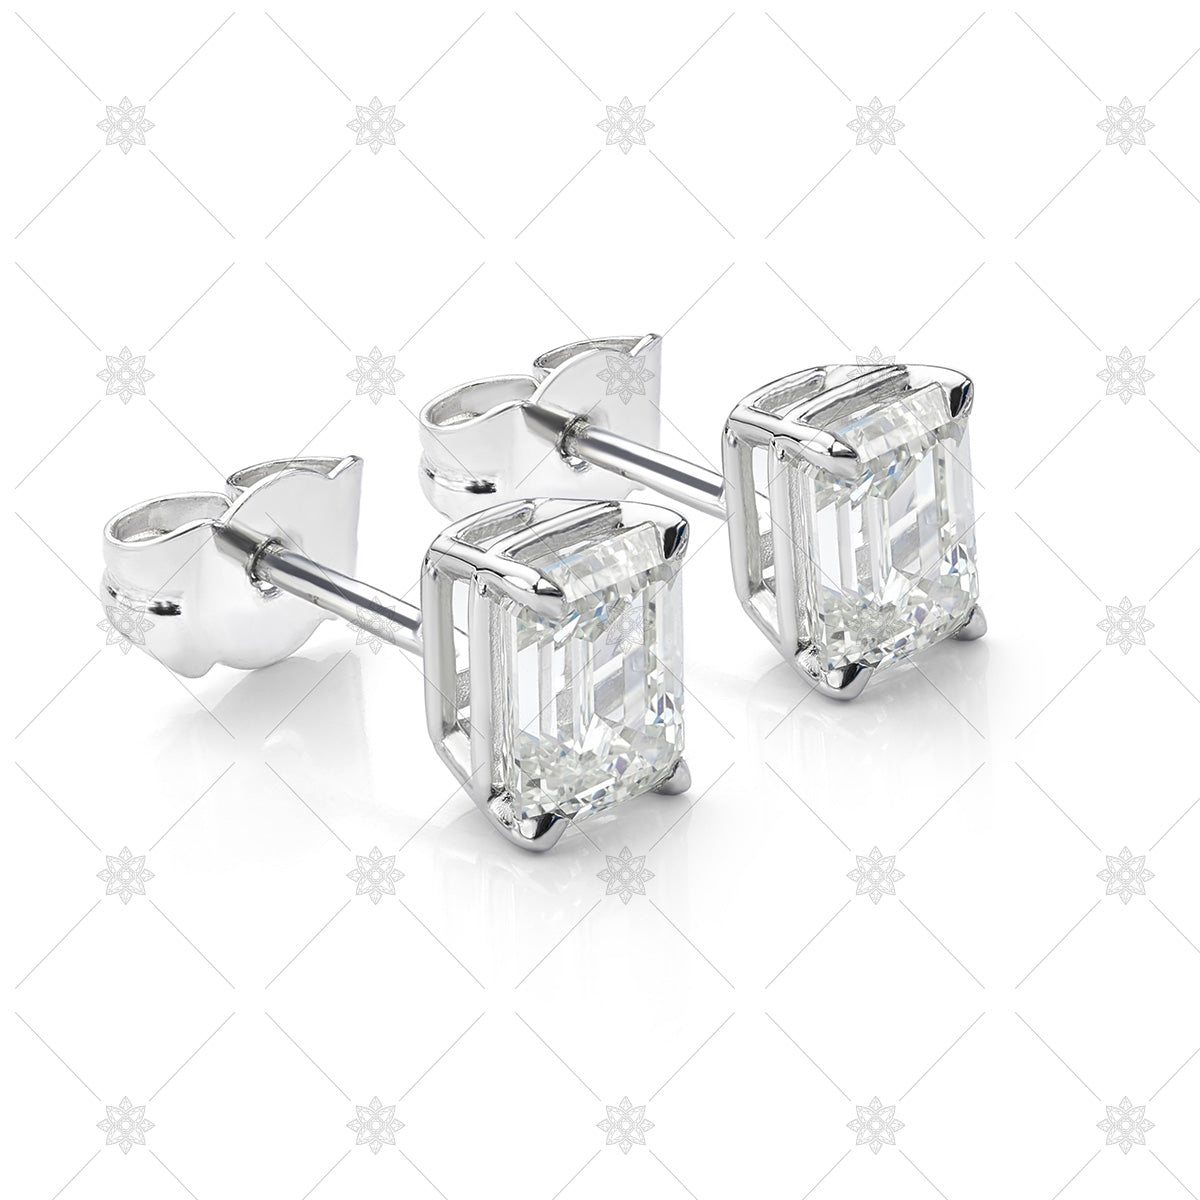 Buy Solid 24K Gold Diamond Stud Earrings Diamond Earrings Online in India   Etsy